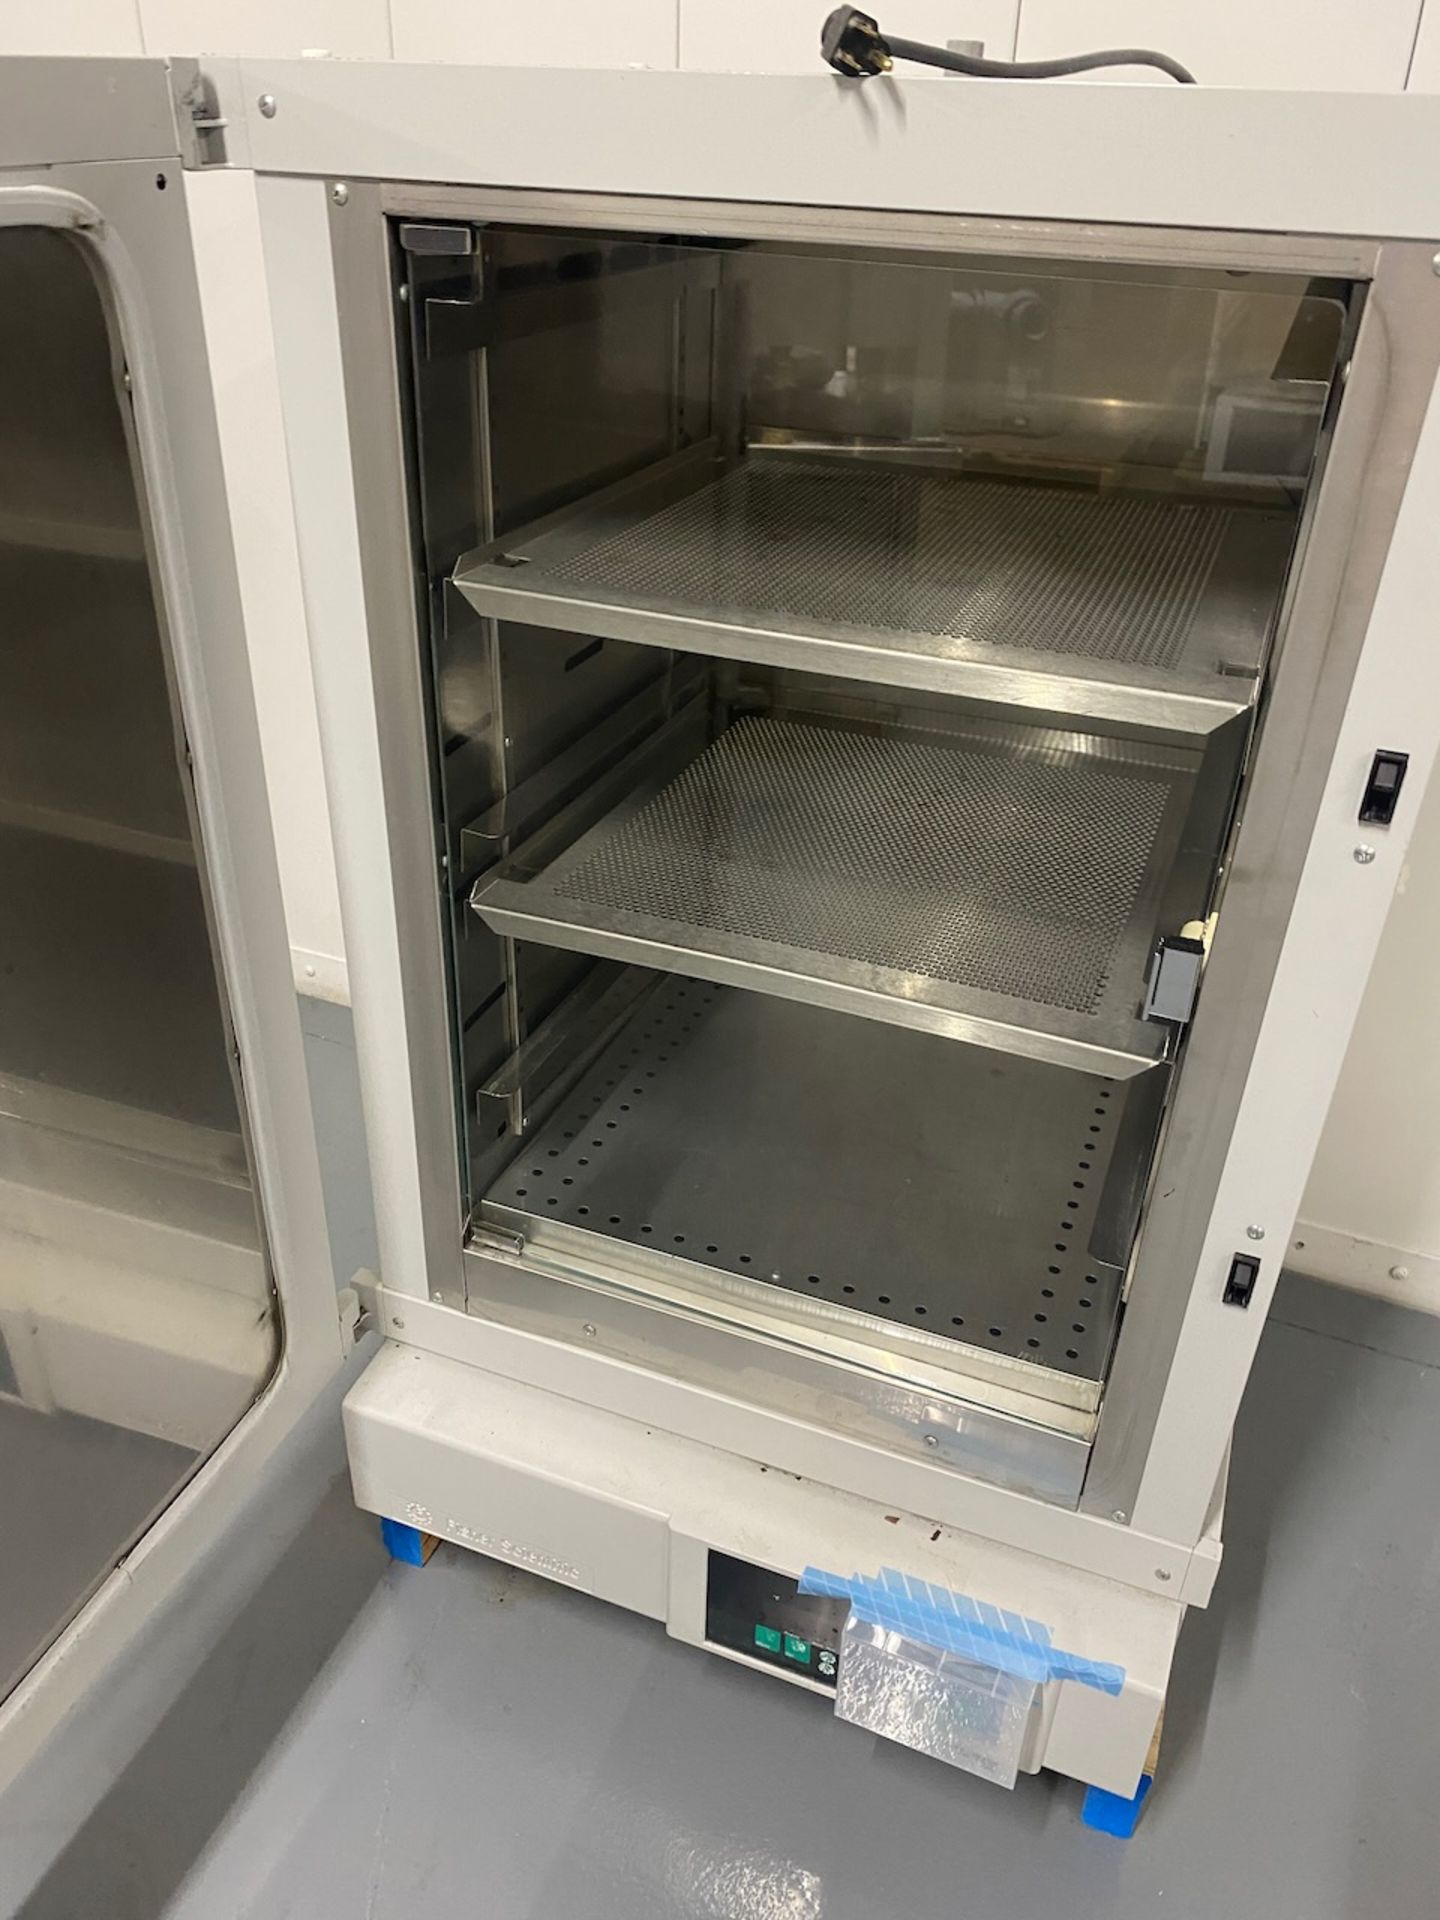 Fisher scientific incubator oven - Image 2 of 4